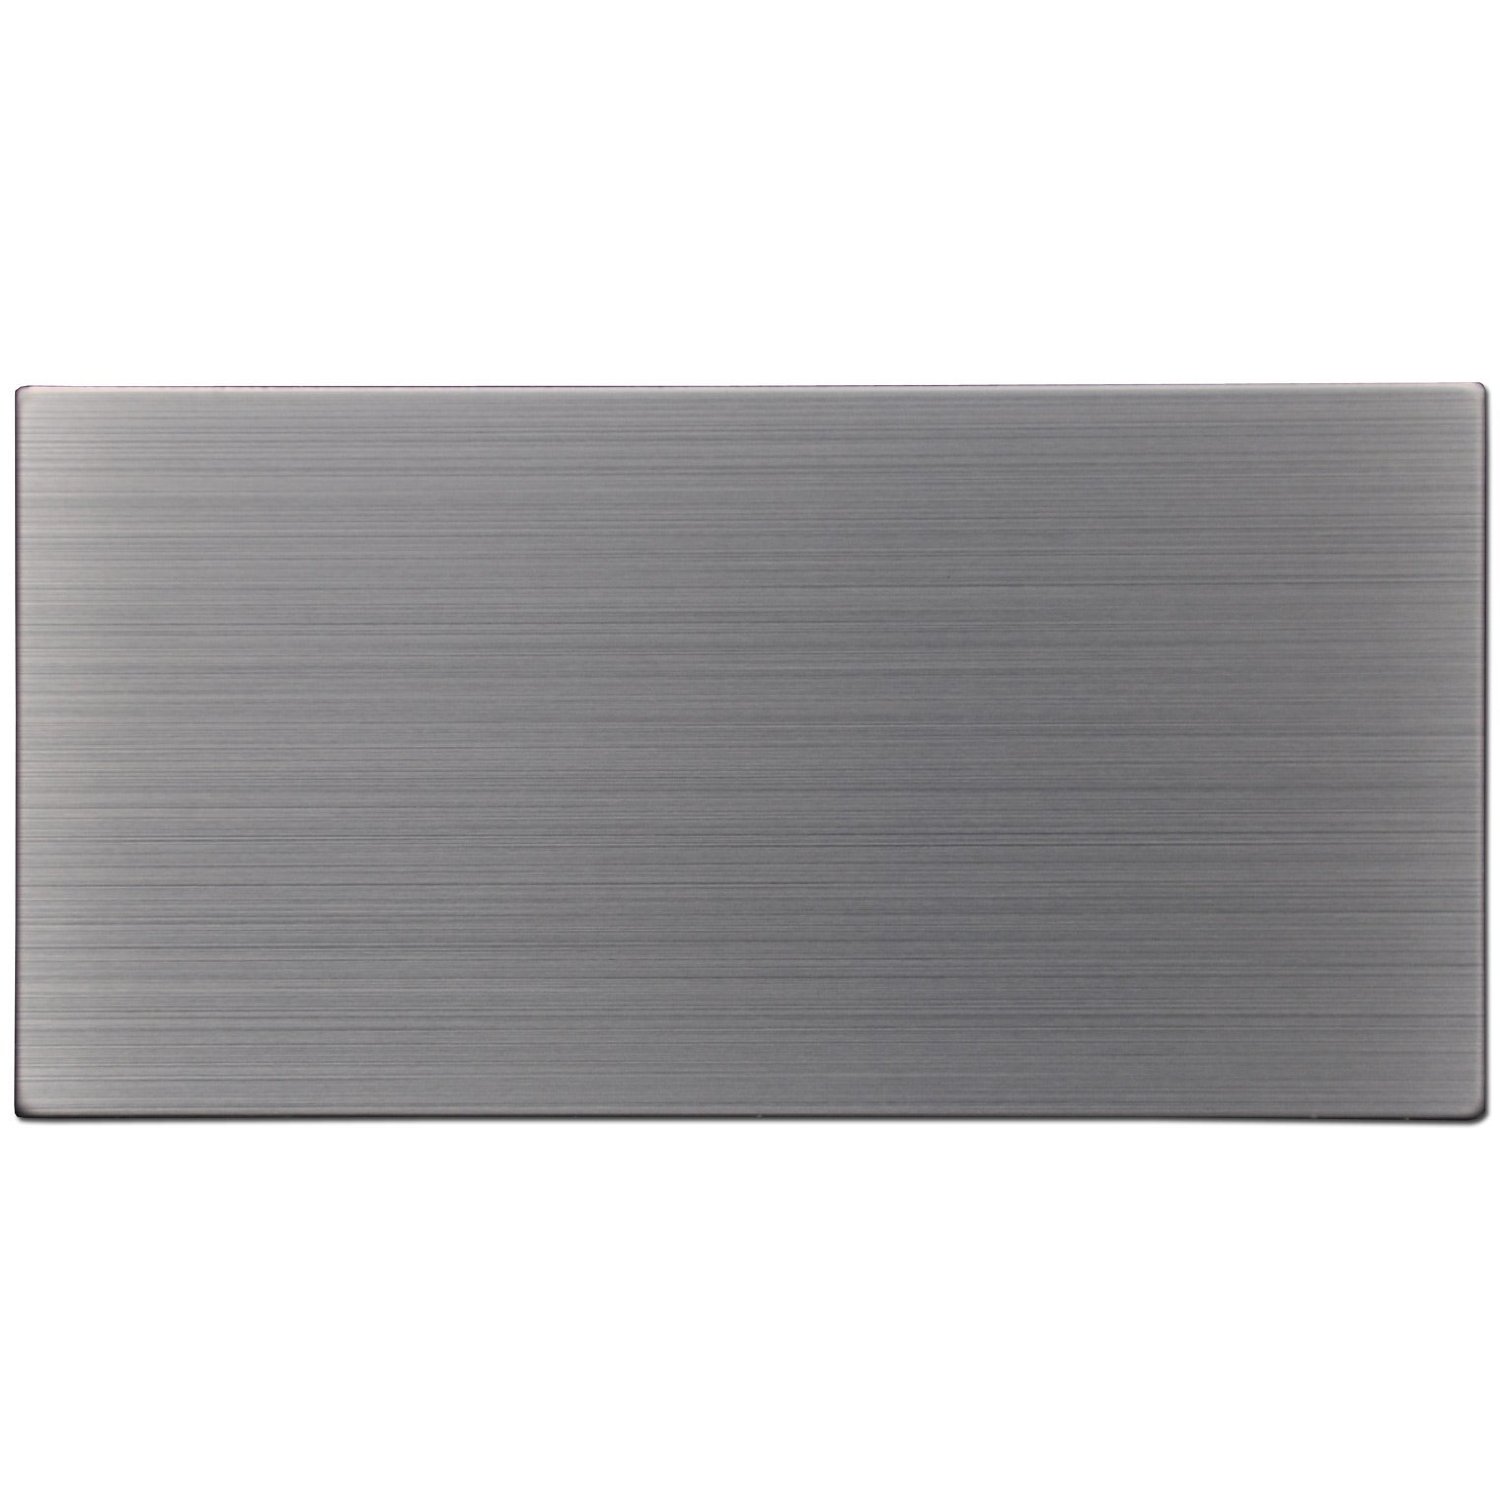 A16021 - Peel and Stick Stainless Steel Backsplash Tiles 3